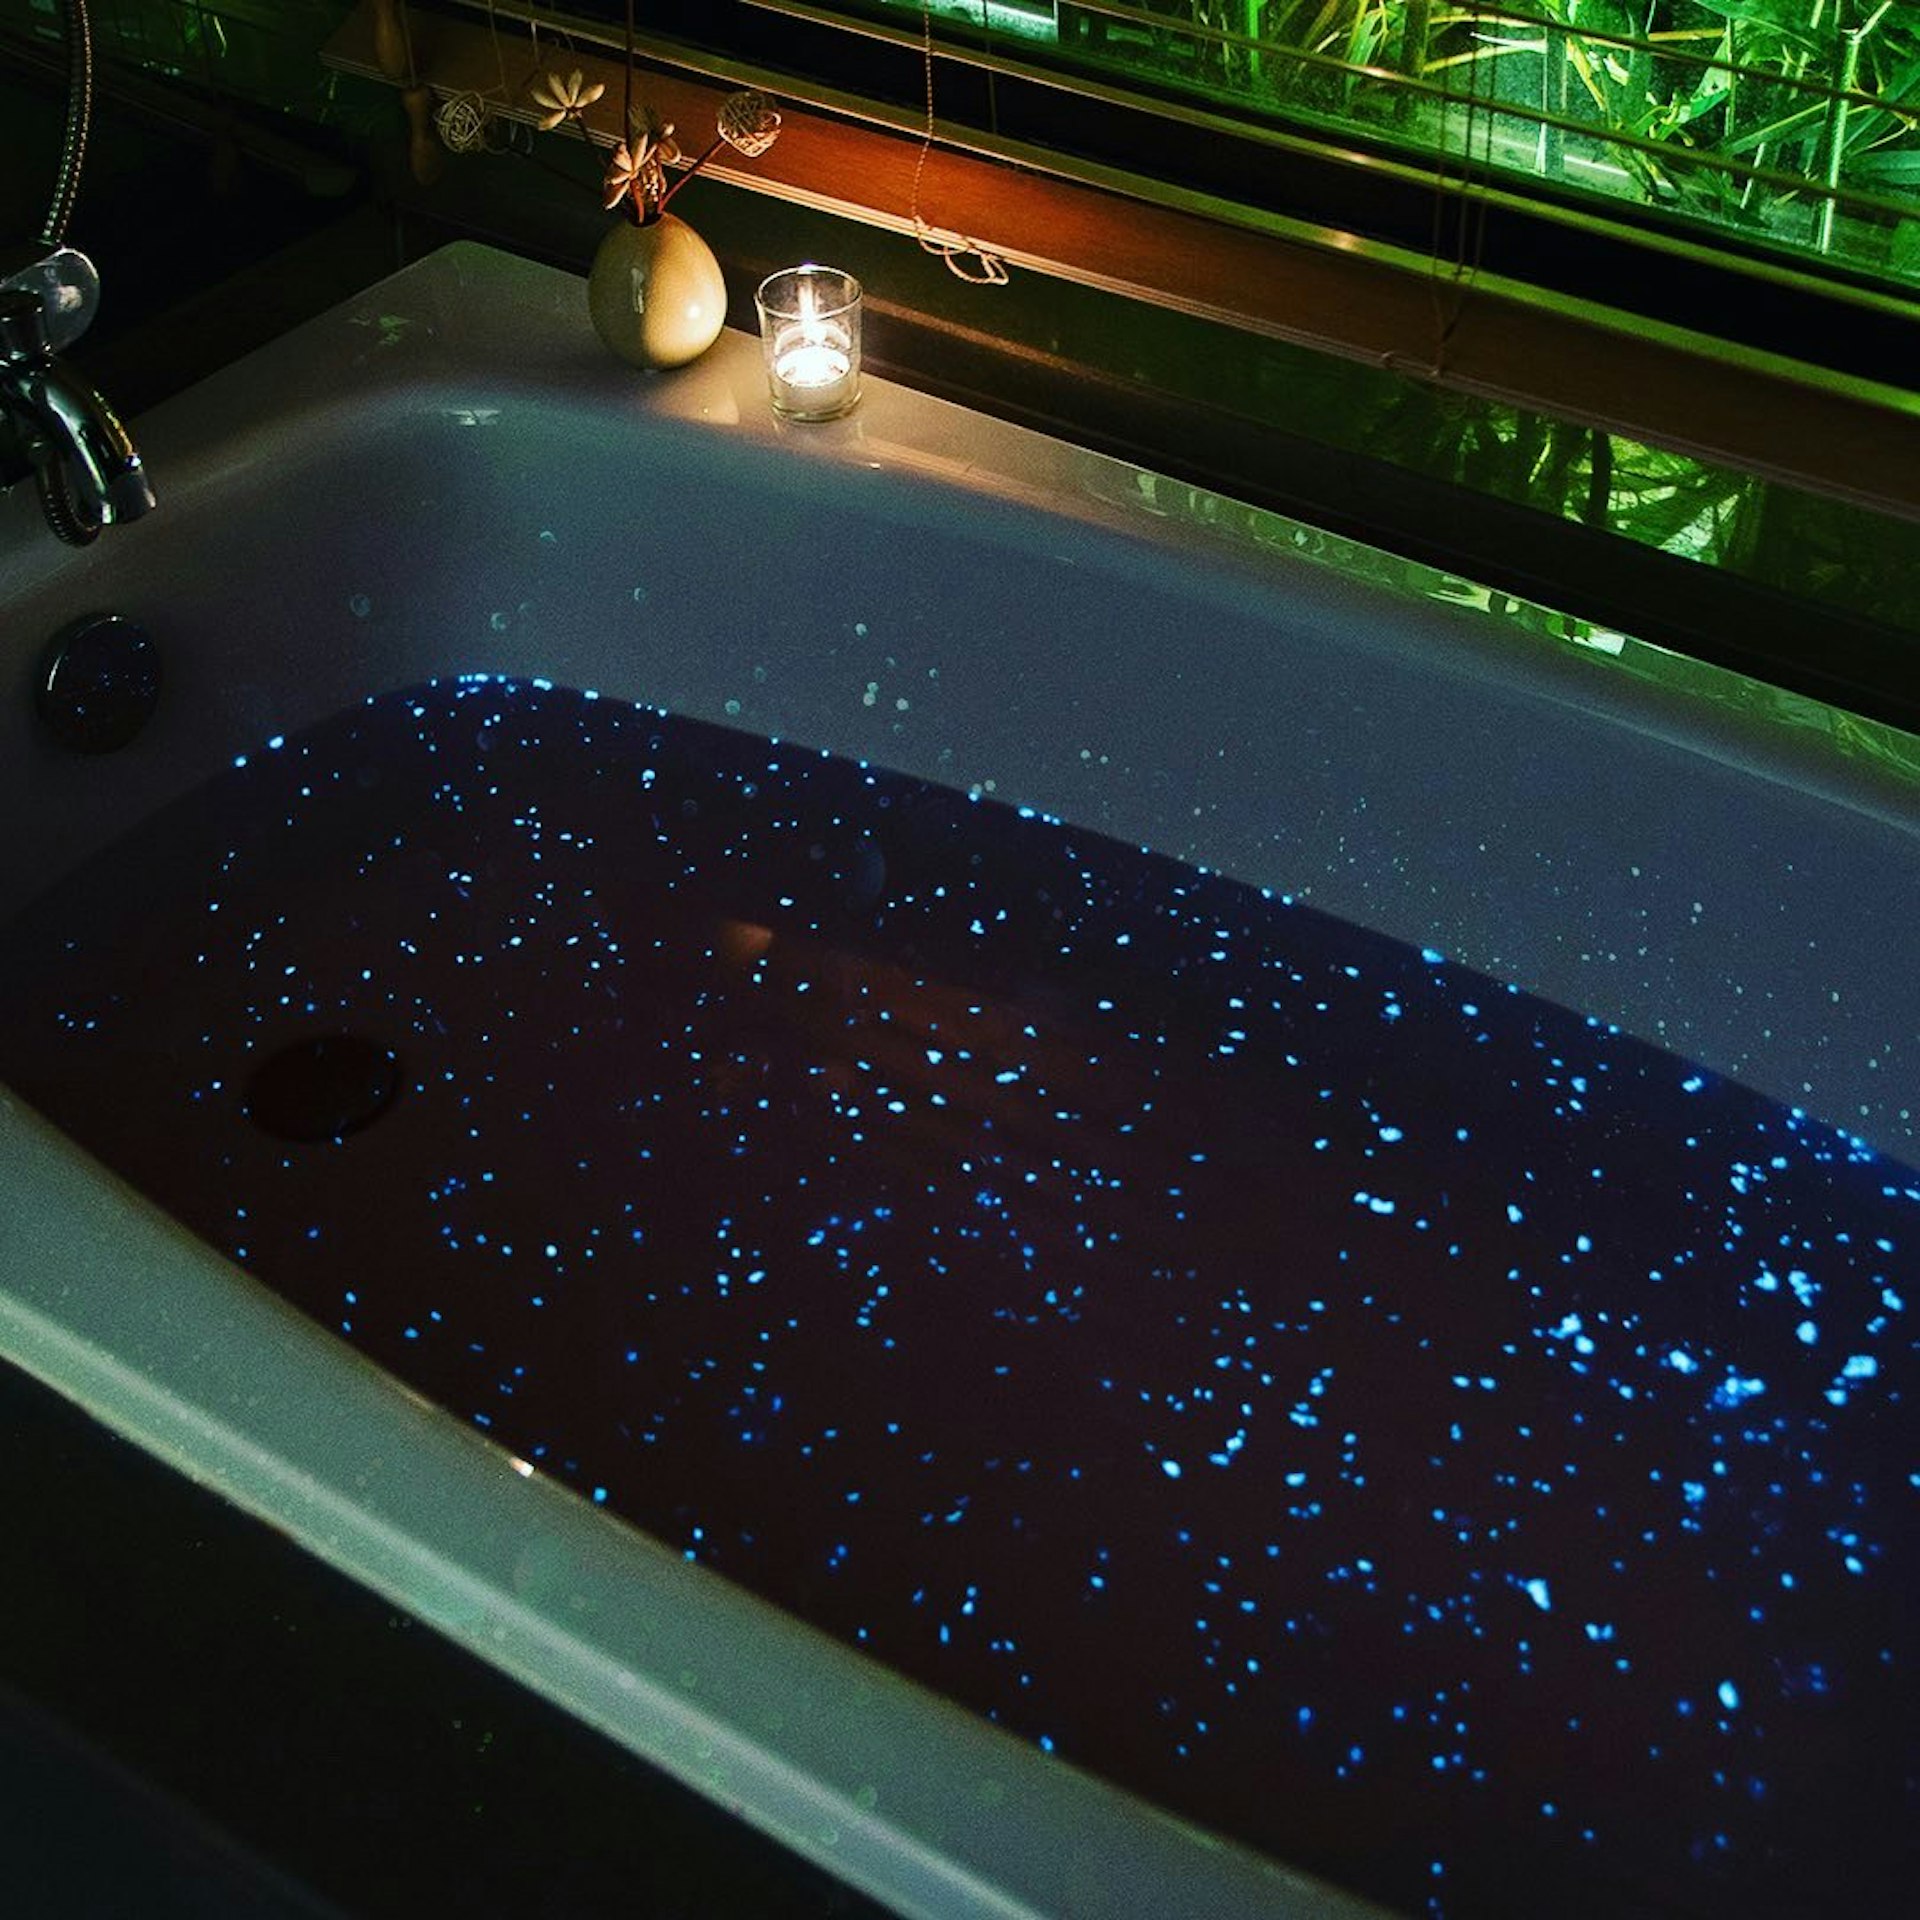 Bath Diamond's luminescent bath bomb in a tub